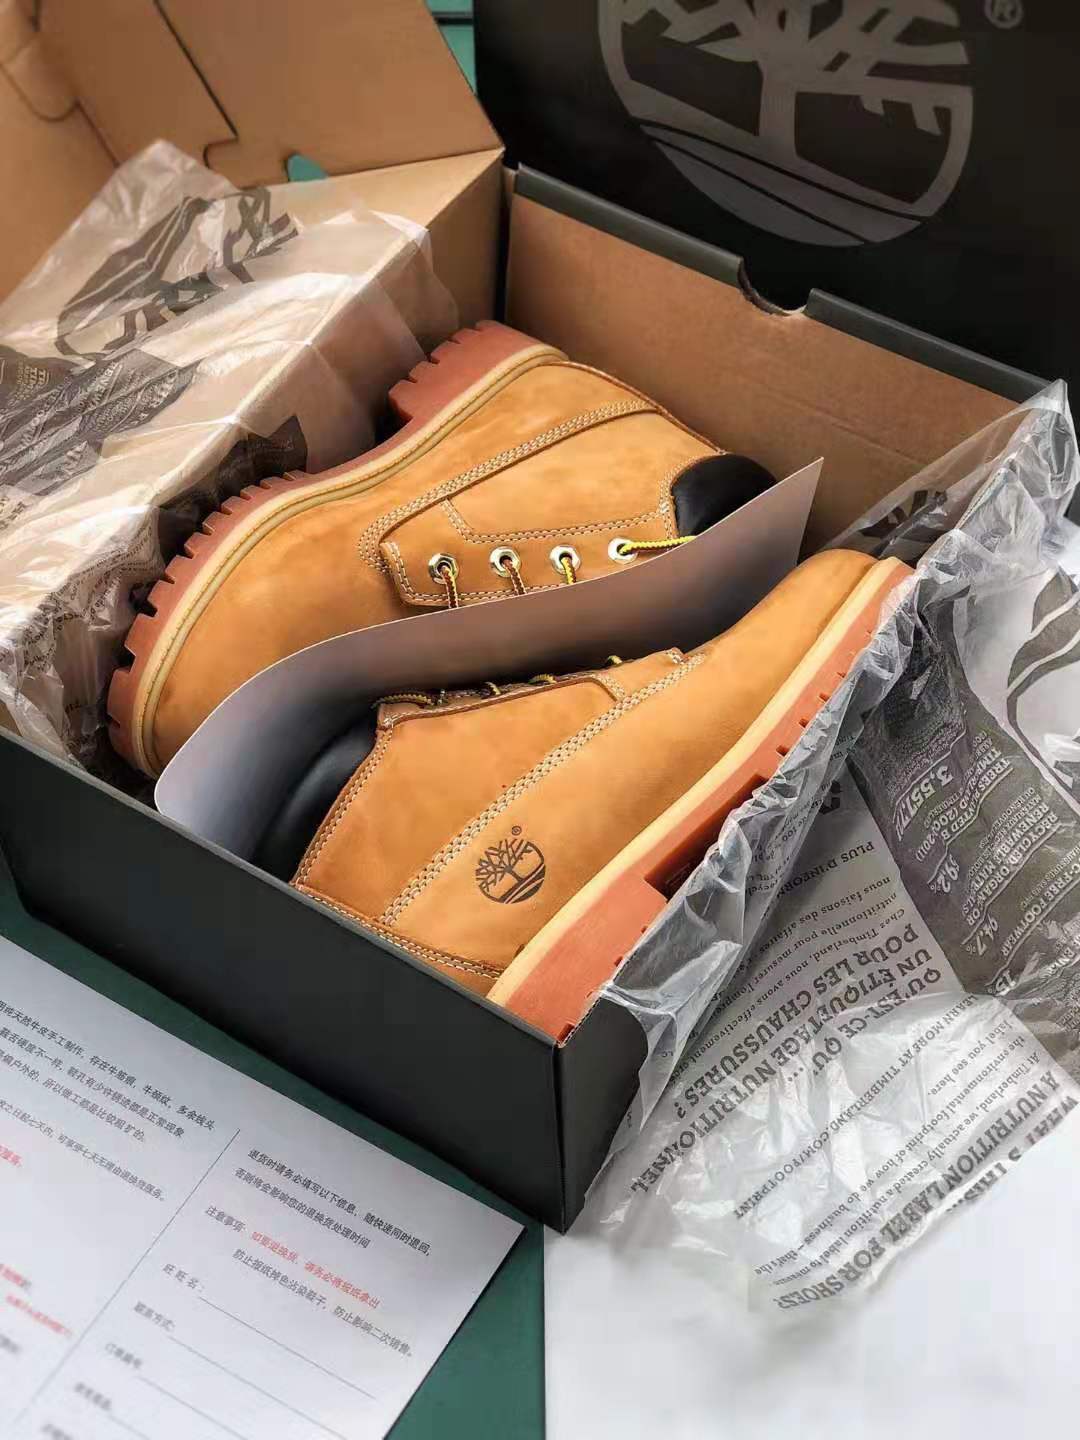 Timberland Newman Chukka Boots 23061: Stylish and Durable Footwear